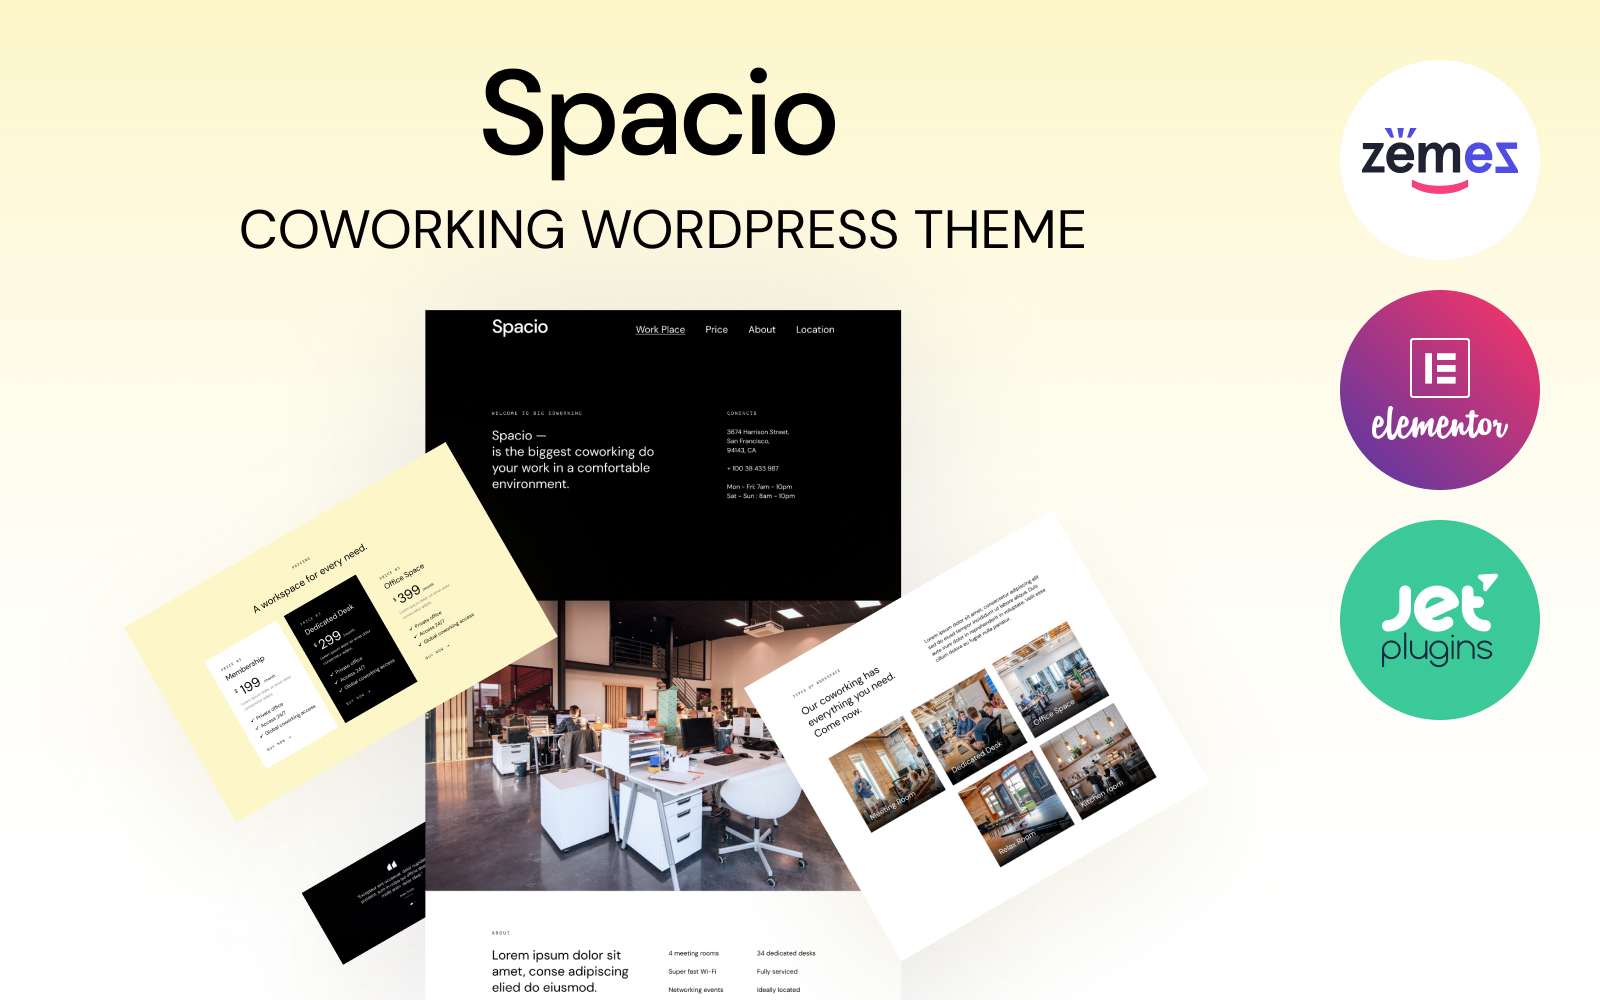 Spacio - Coworking WordPress Theme to Unite Workers